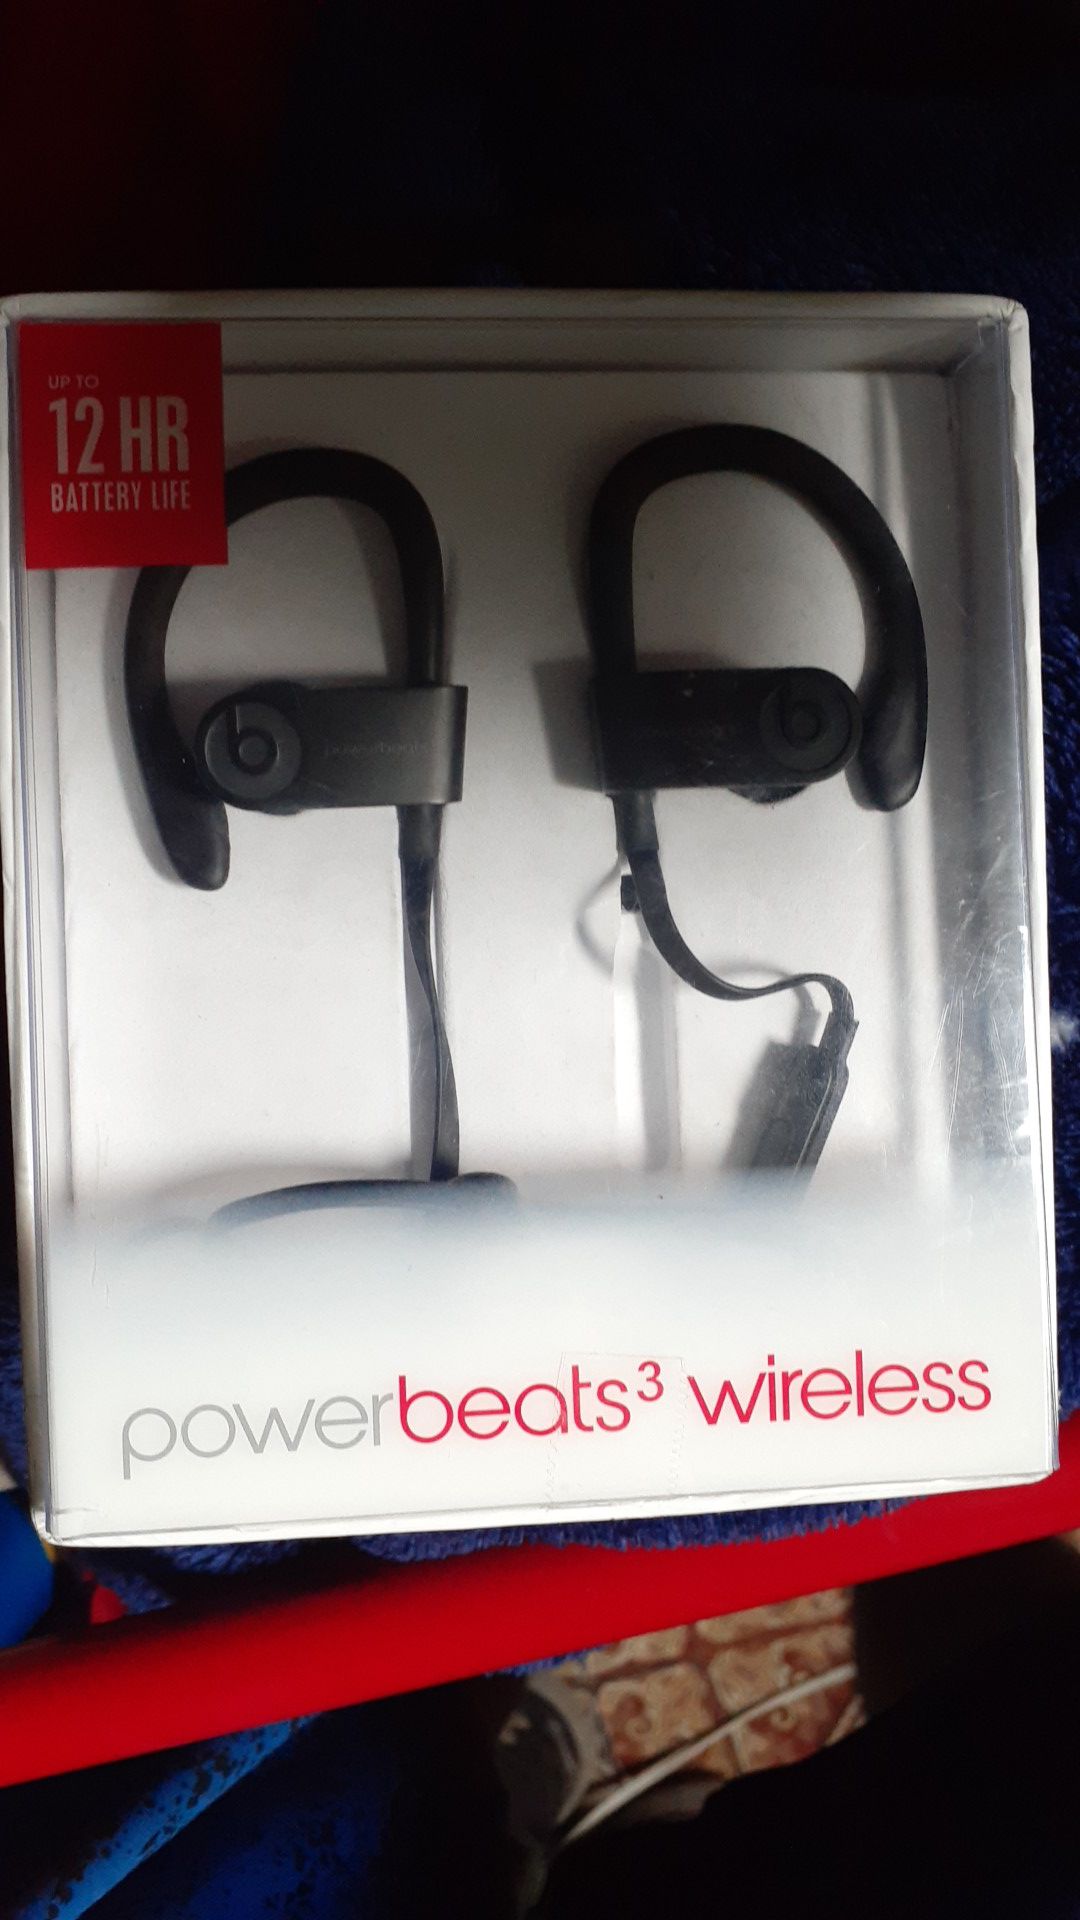 Power beats 3 wireless